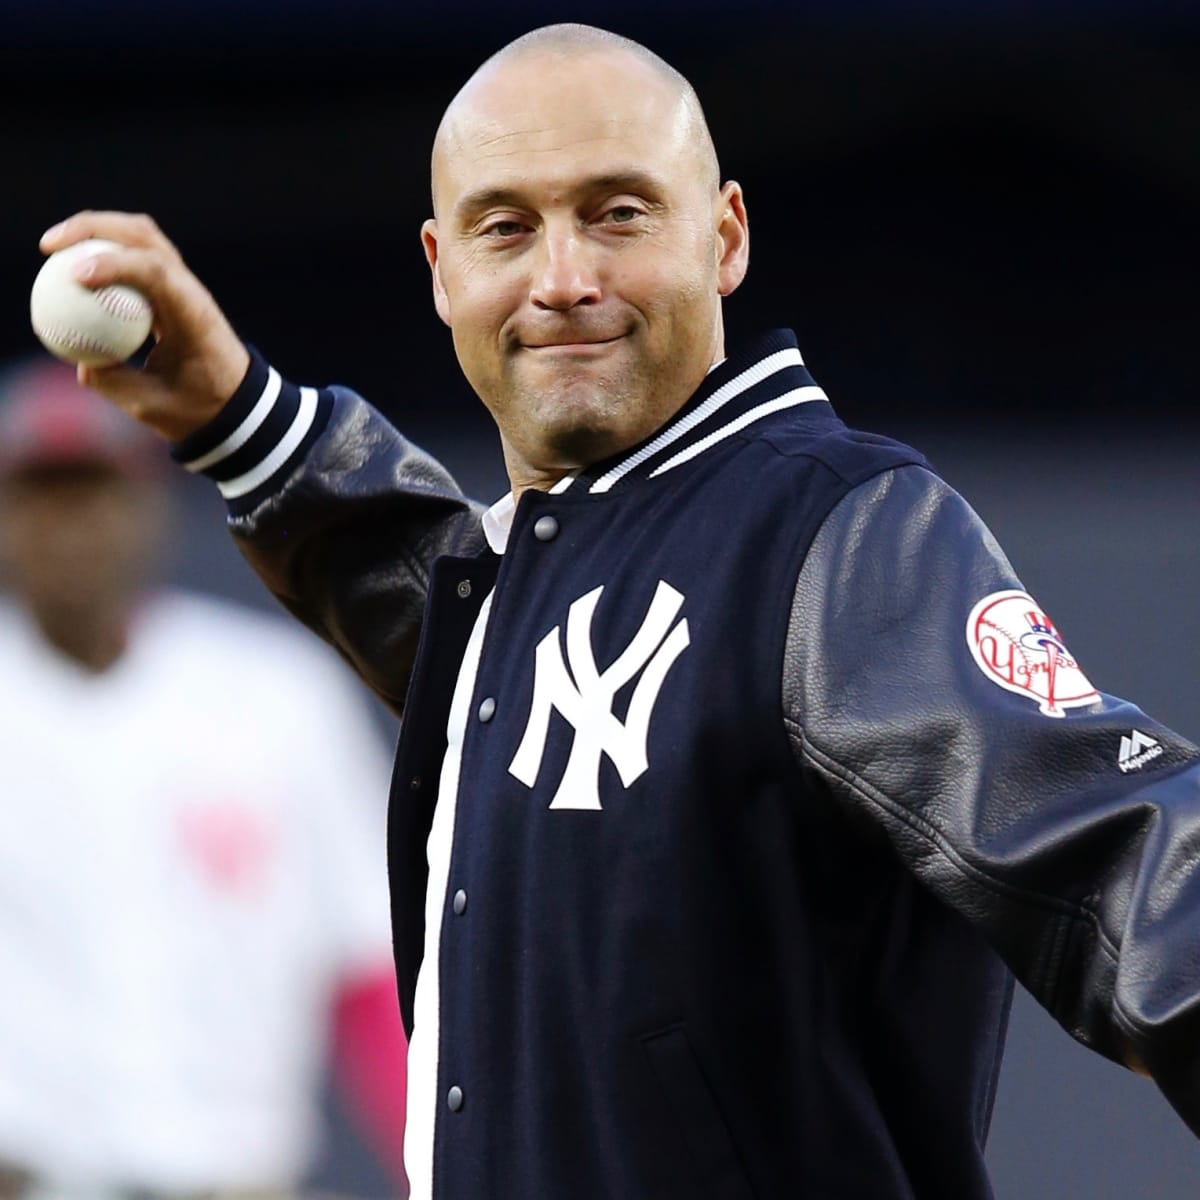 Masahiro Tanaka No Name Jersey - Yankees Replica Home Number Only Jersey